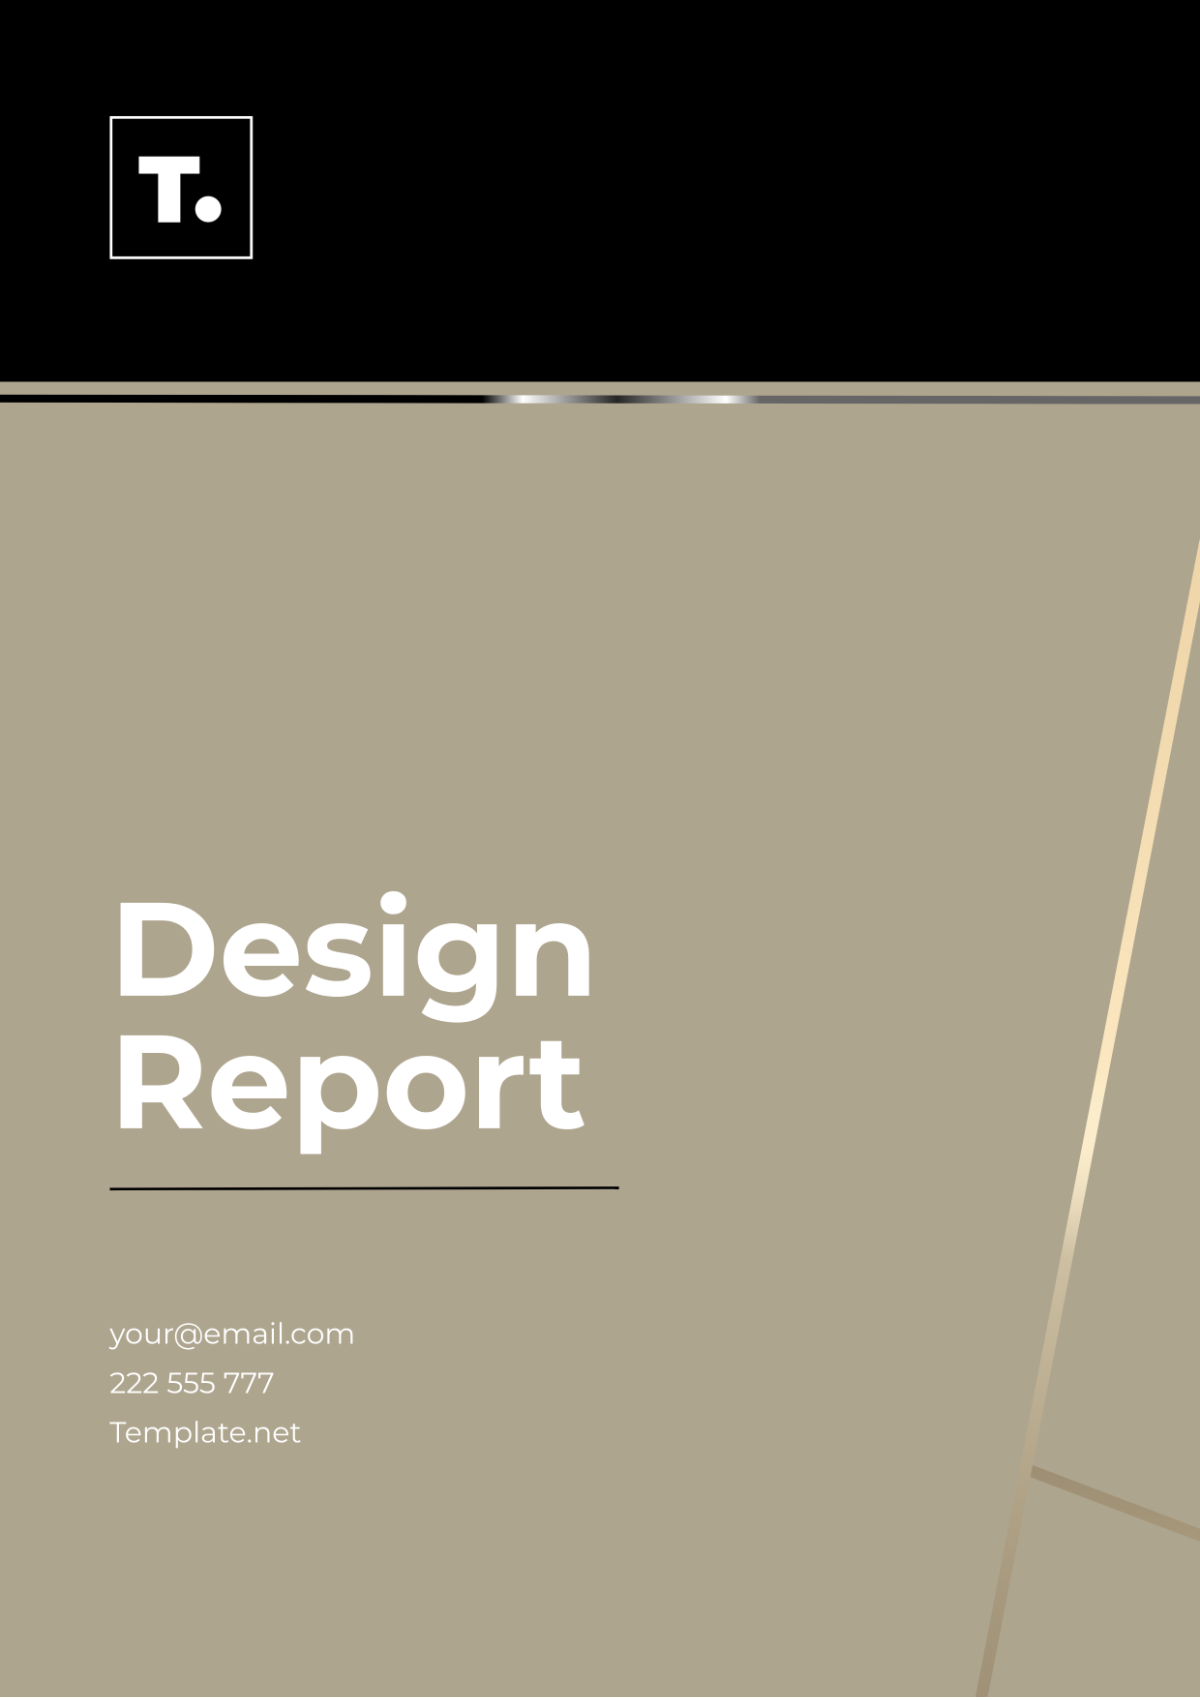 Design Report Template